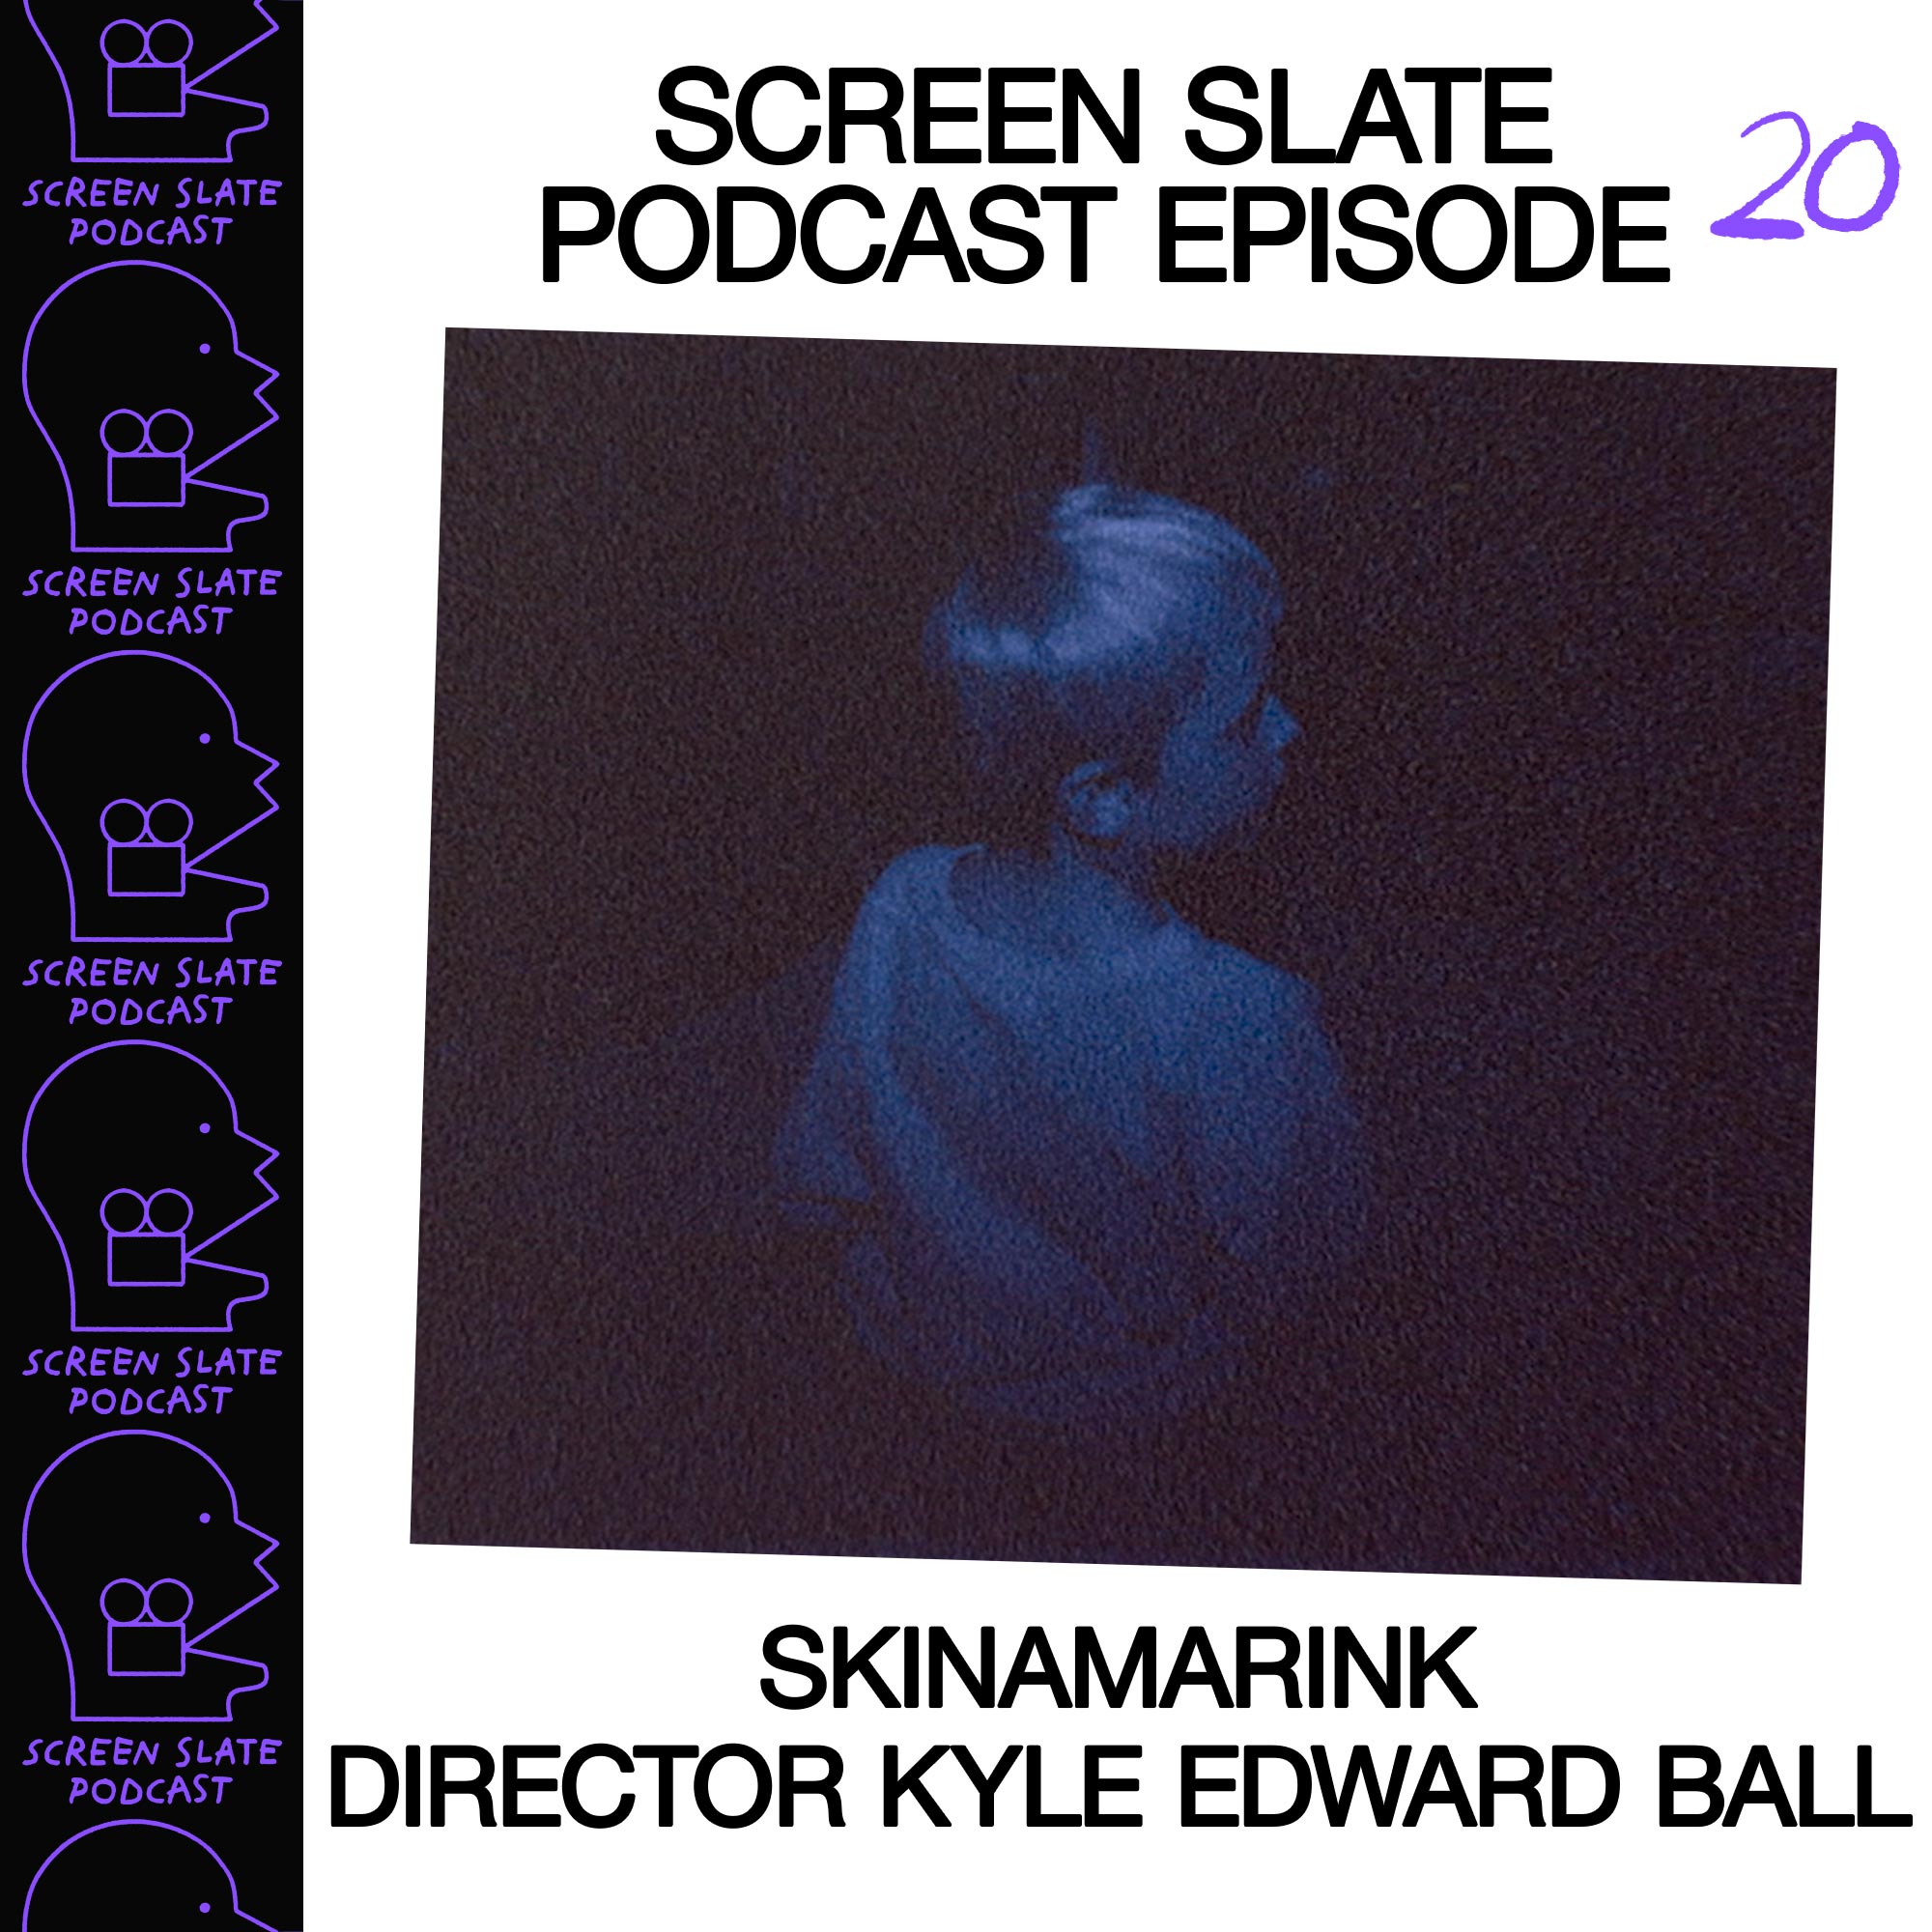 Episode 20 - Skinamarink director Kyle Edward Ball